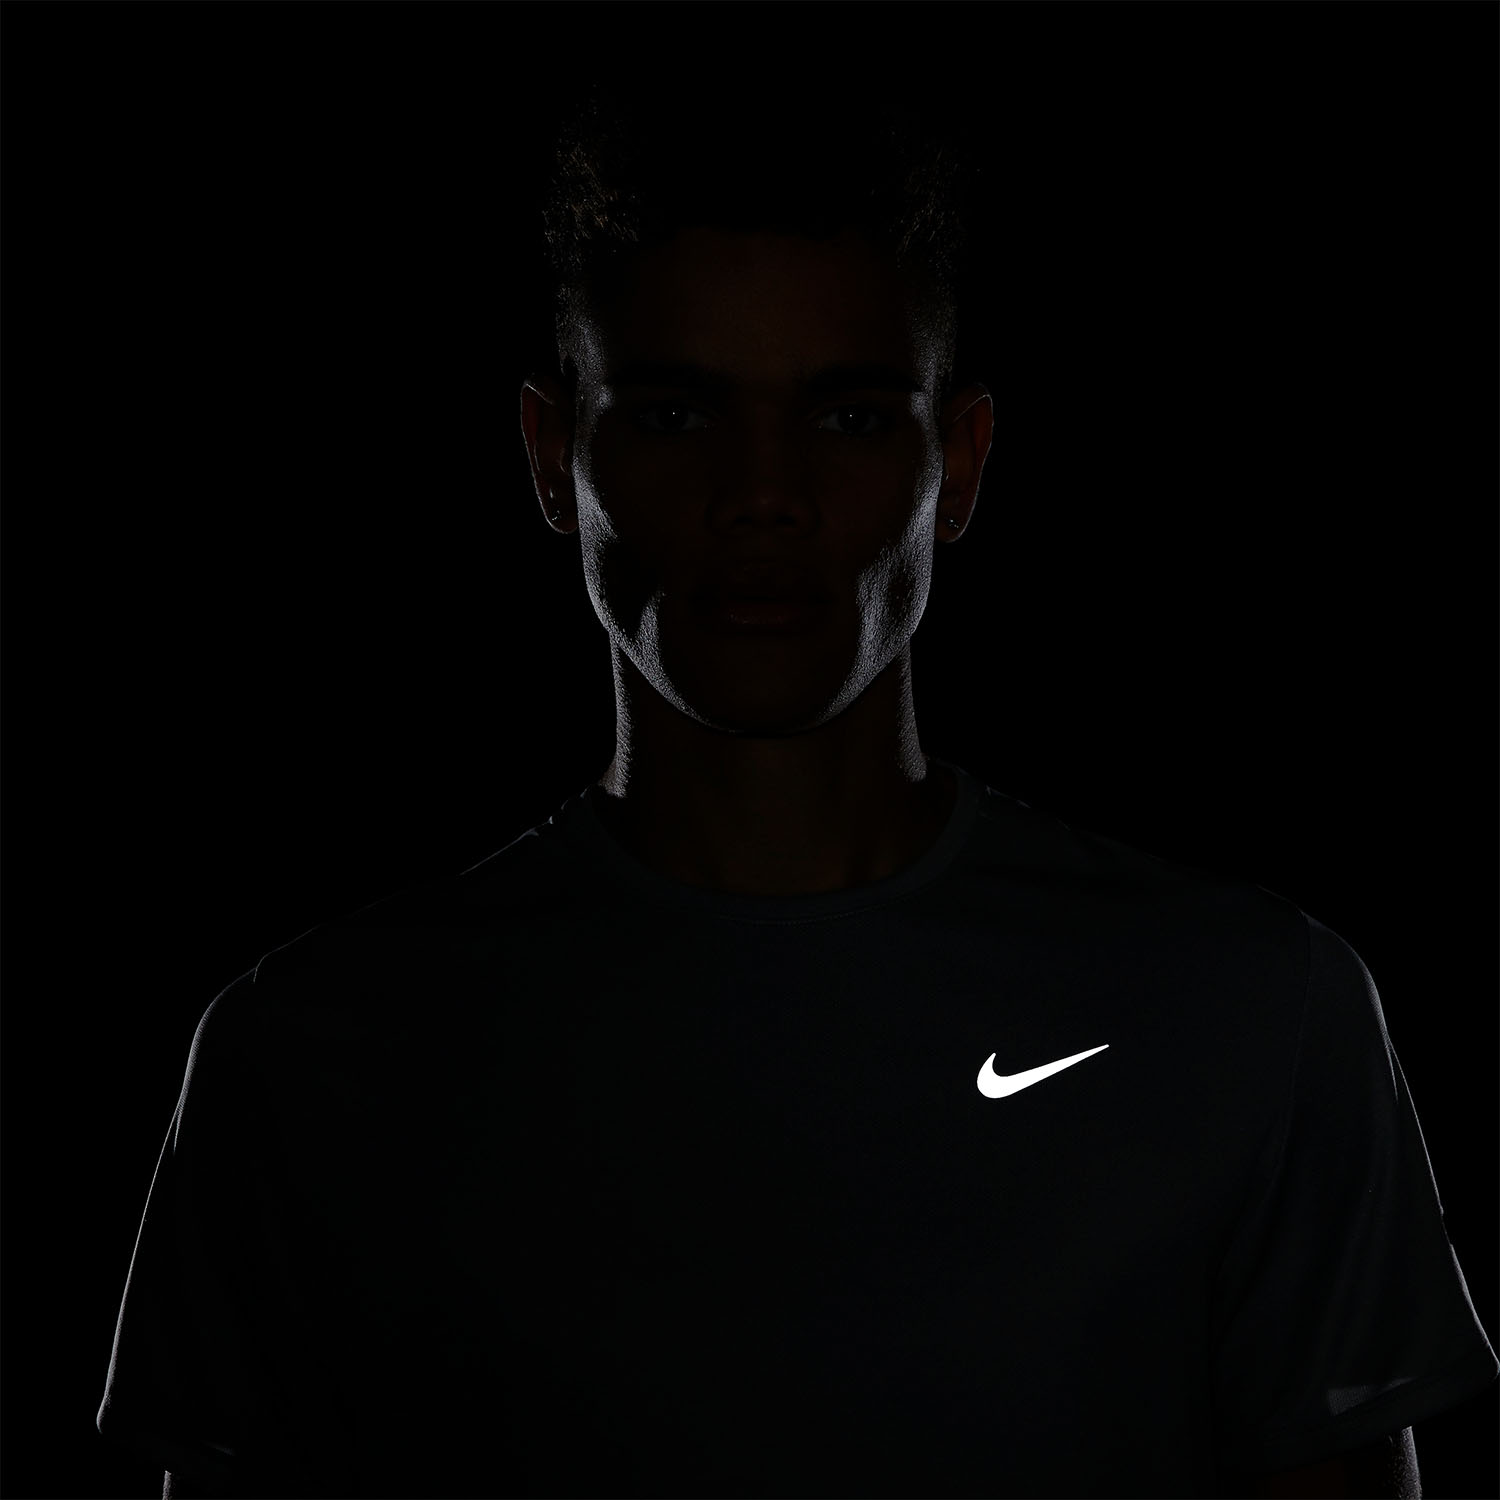 Nike Dri-FIT UV Division Men's Running T-Shirt Particle Grey